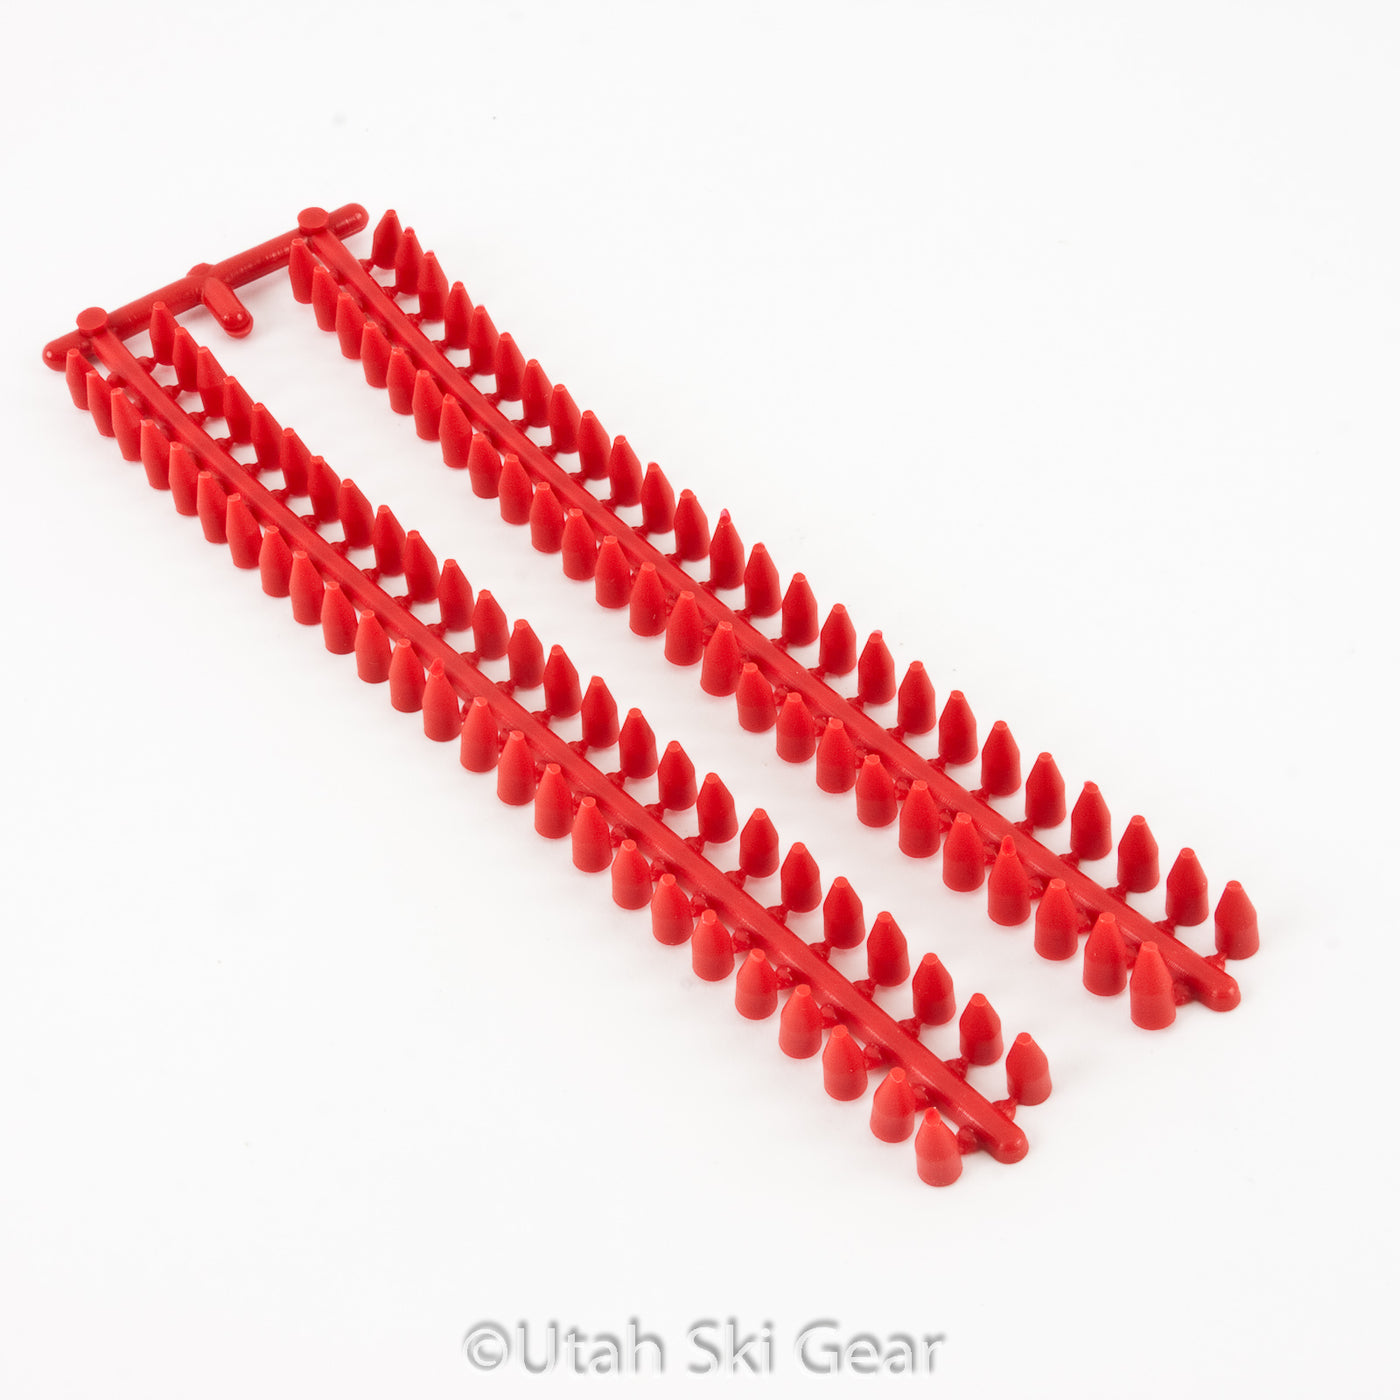 Strip of Binding Hole Plugs - Red - 100 pieces BINDING MOUNTING Wintersteiger   